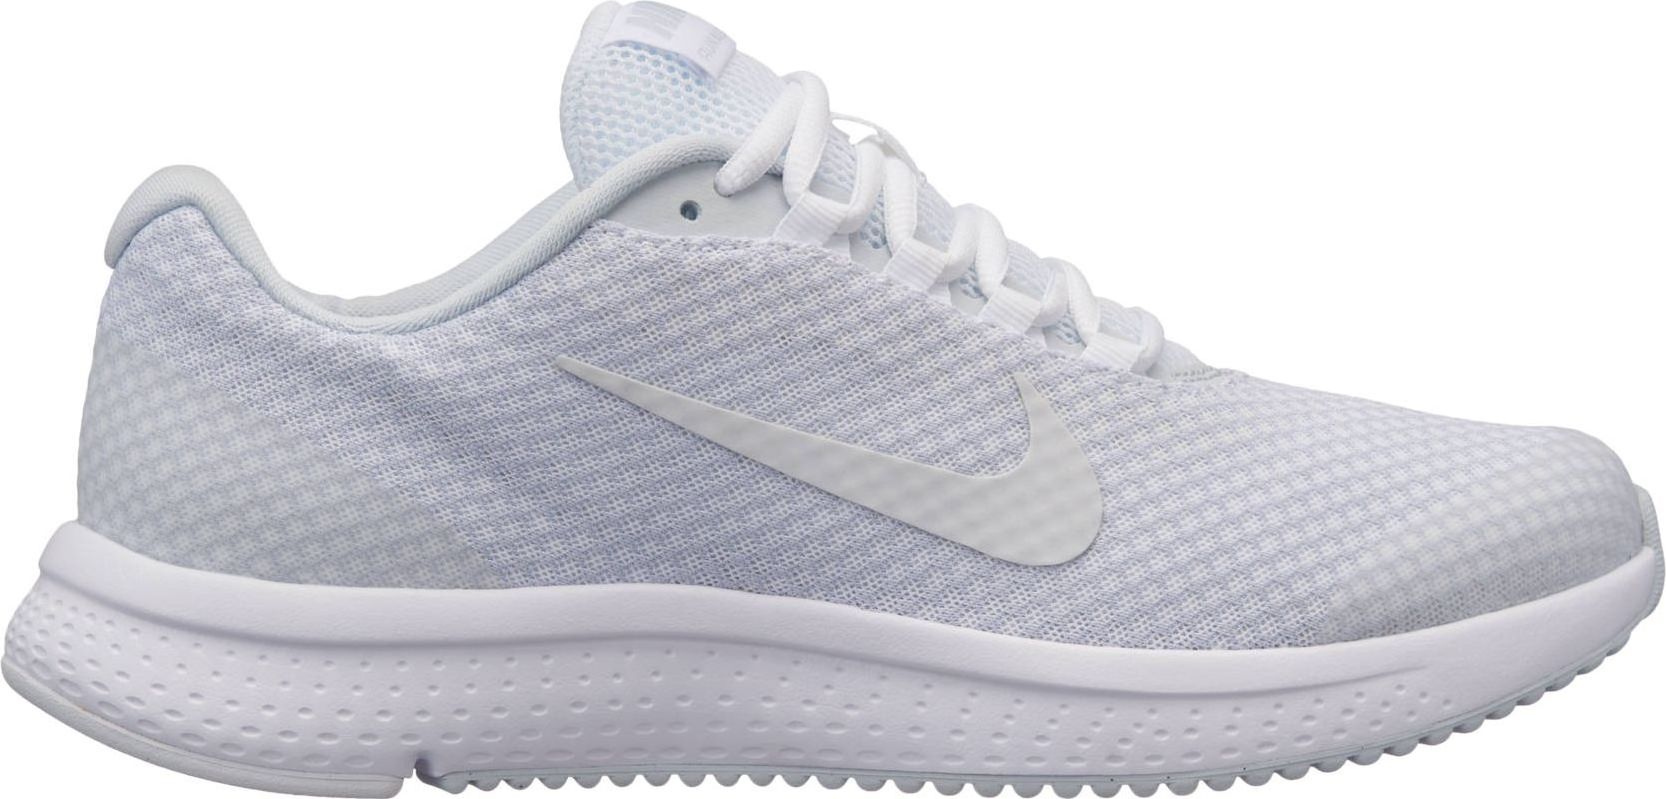 Кроссовки для бега женские Nike Run All Day, цвет: белый. 898484-101. Размер 7 (37)